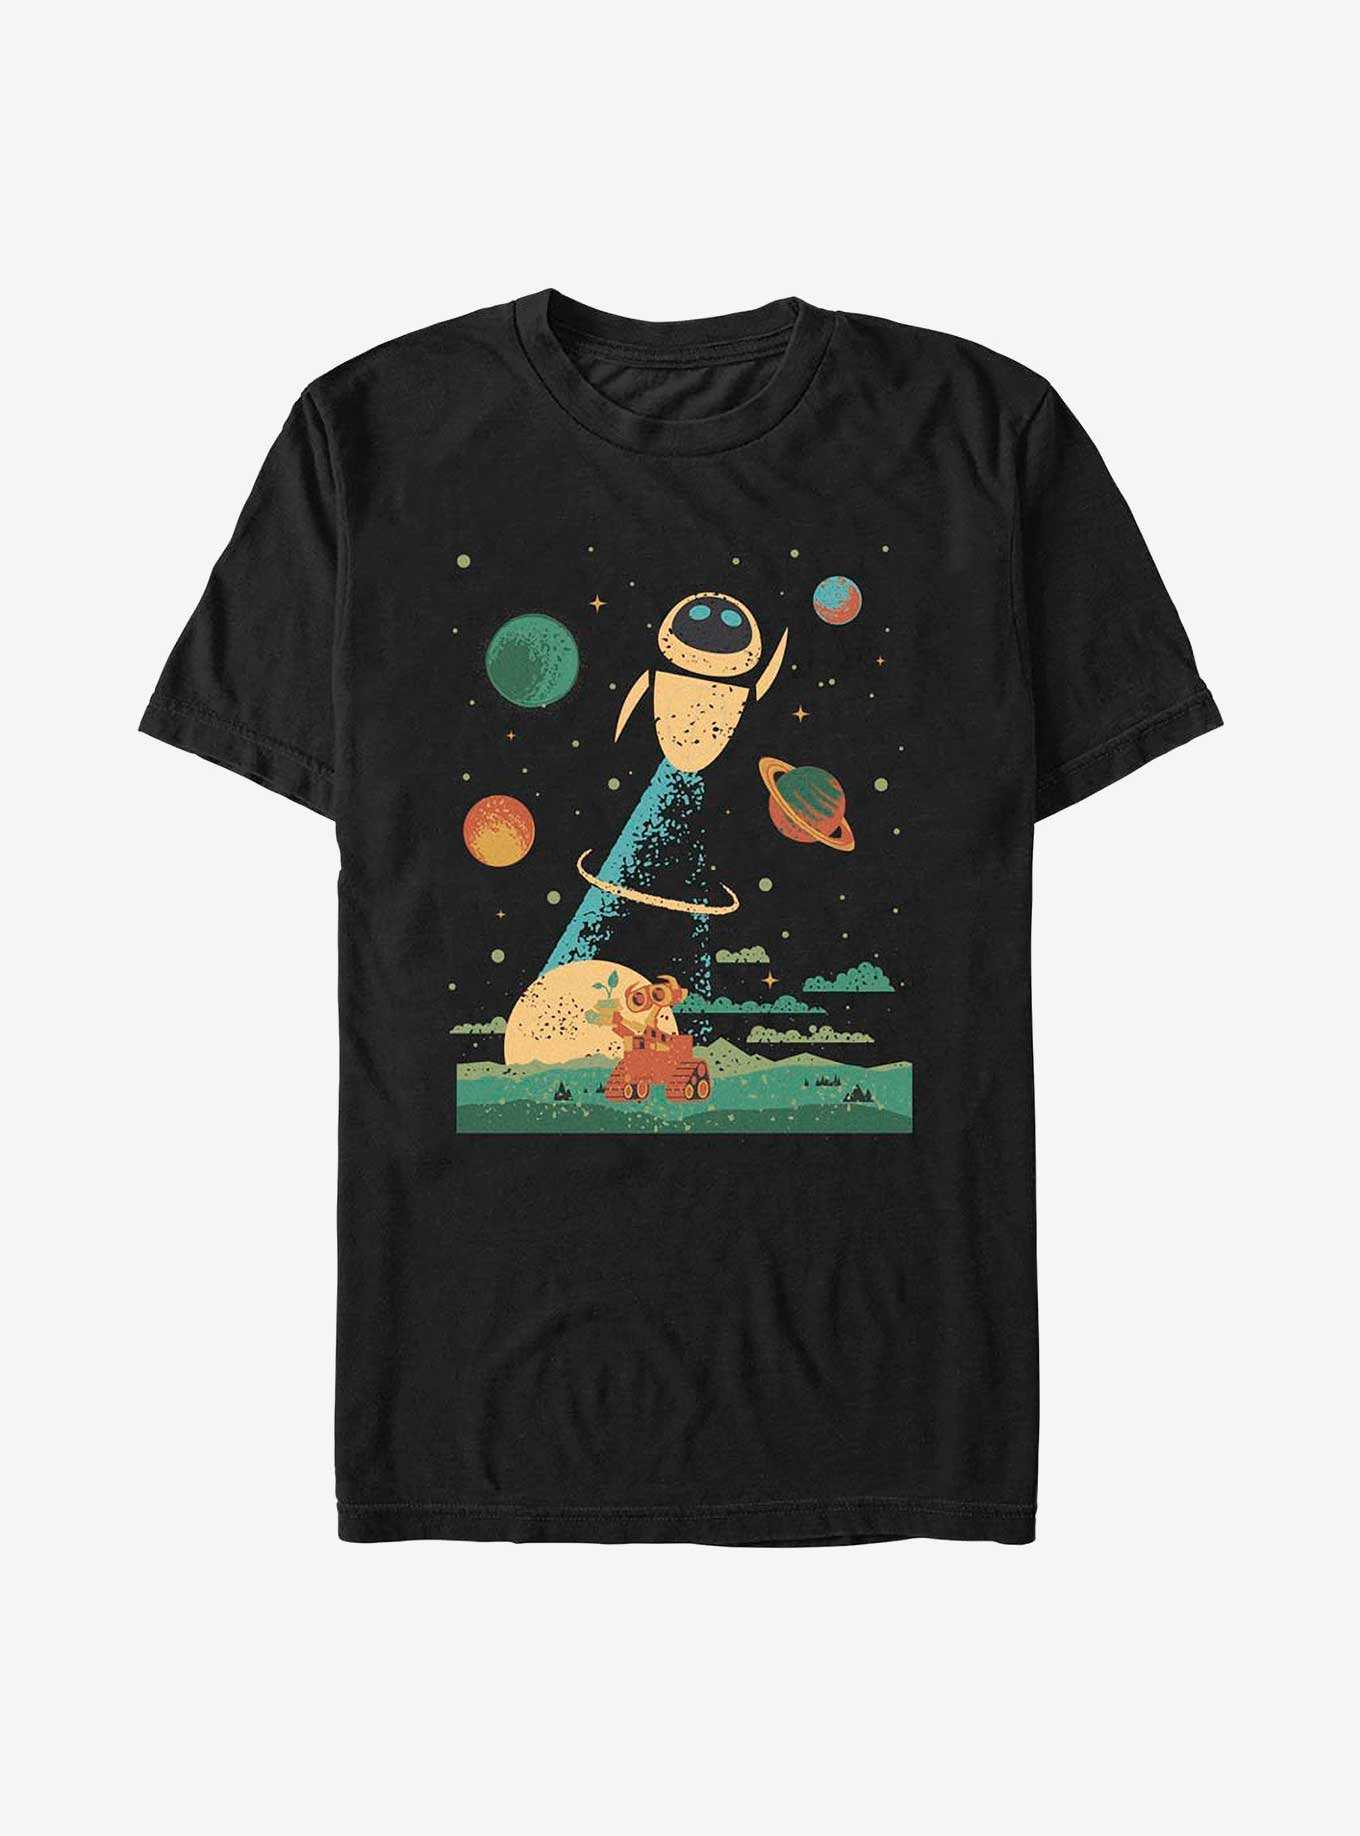 Disney Pixar Wall-E Eve and Wall-E Space Poster T-Shirt, , hi-res